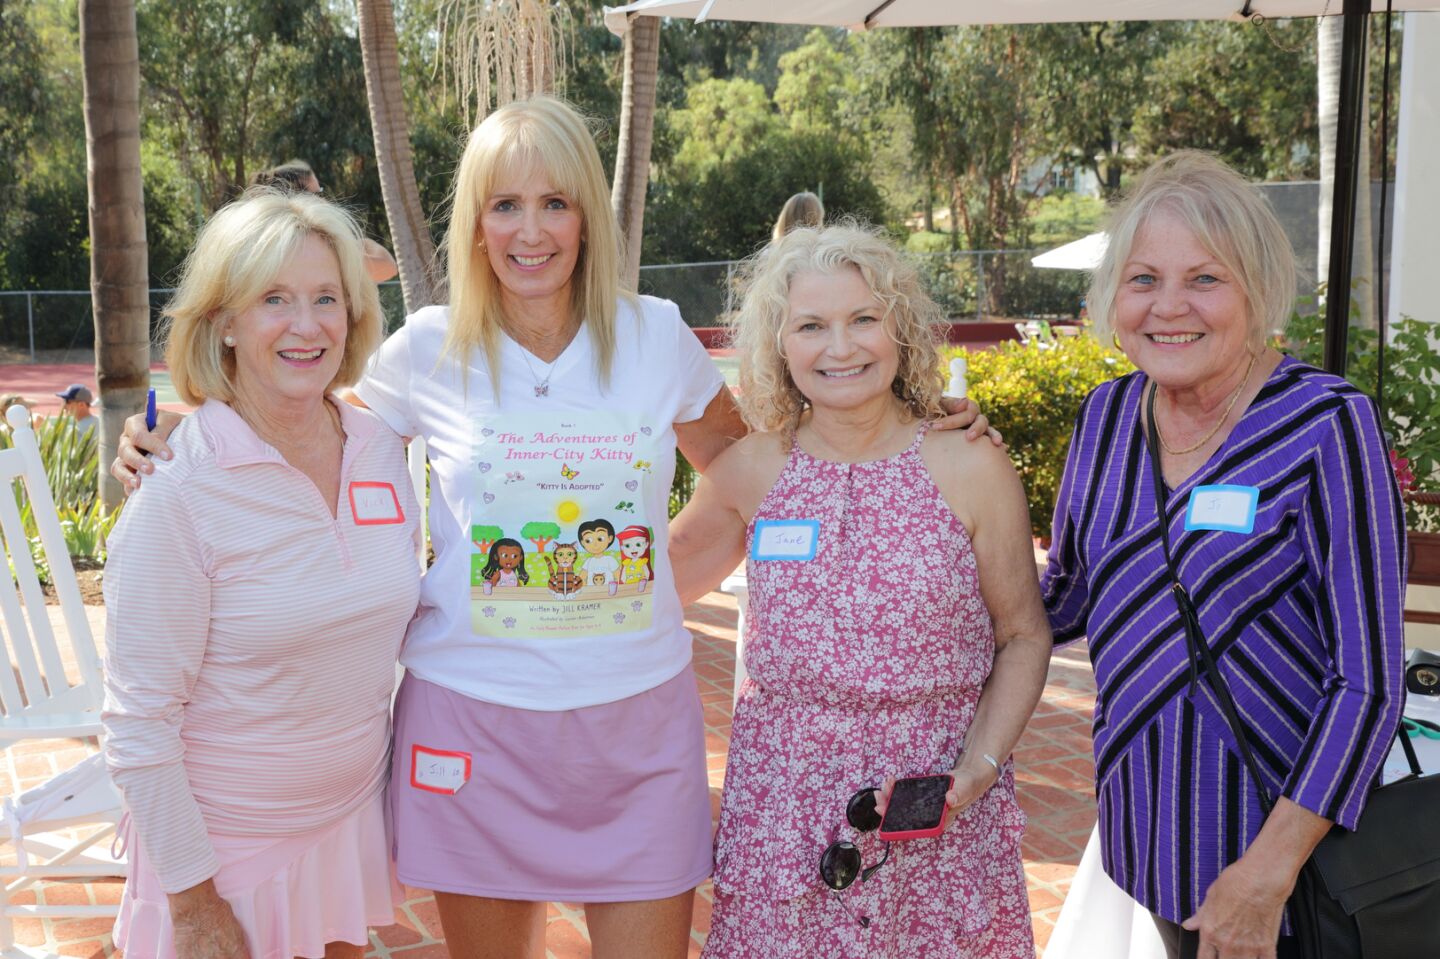 Host Vicki Perry, author Jill Kramer, Jane Goodwin, Joanne Leigh